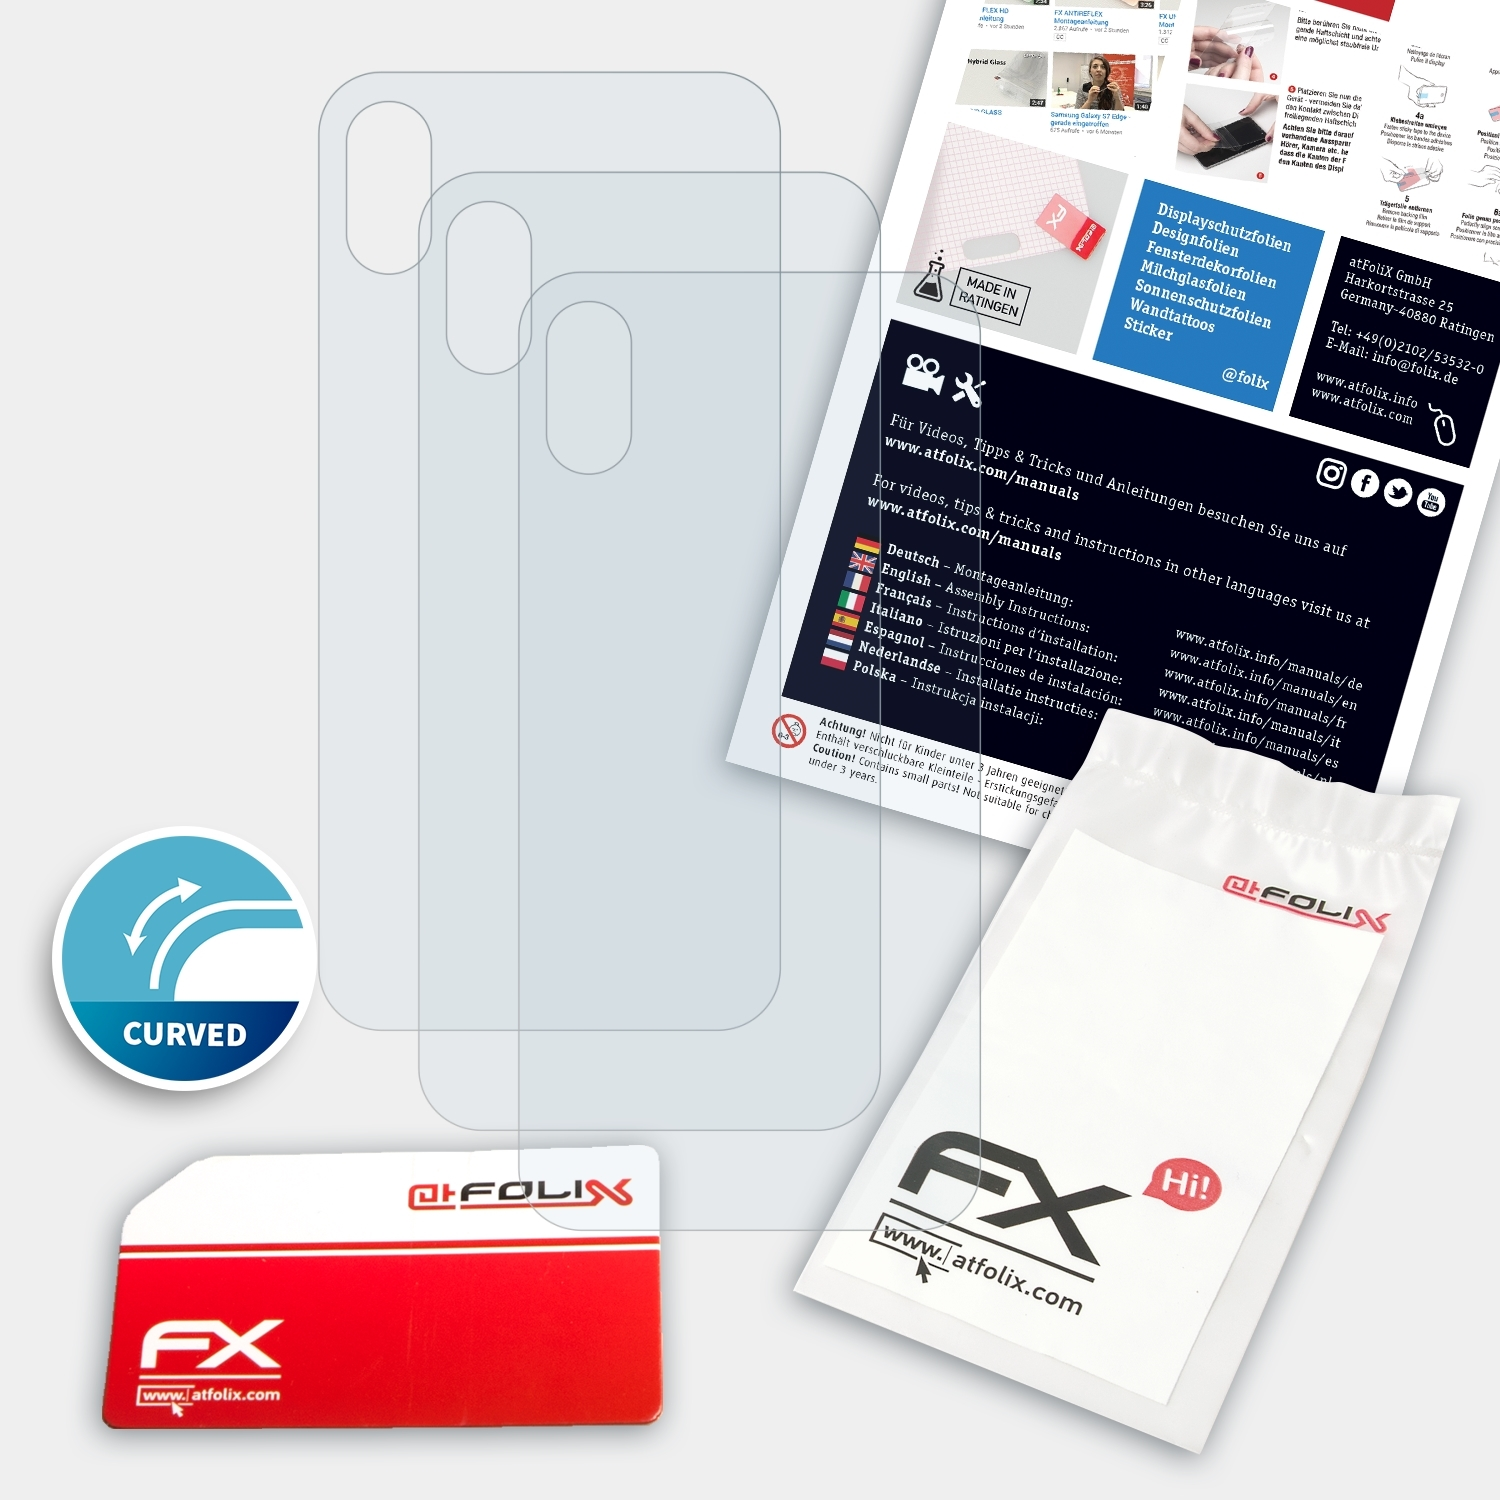 ATFOLIX 3x FX-ActiFleX Displayschutz(für Apple (Back XS cover)) iPhone